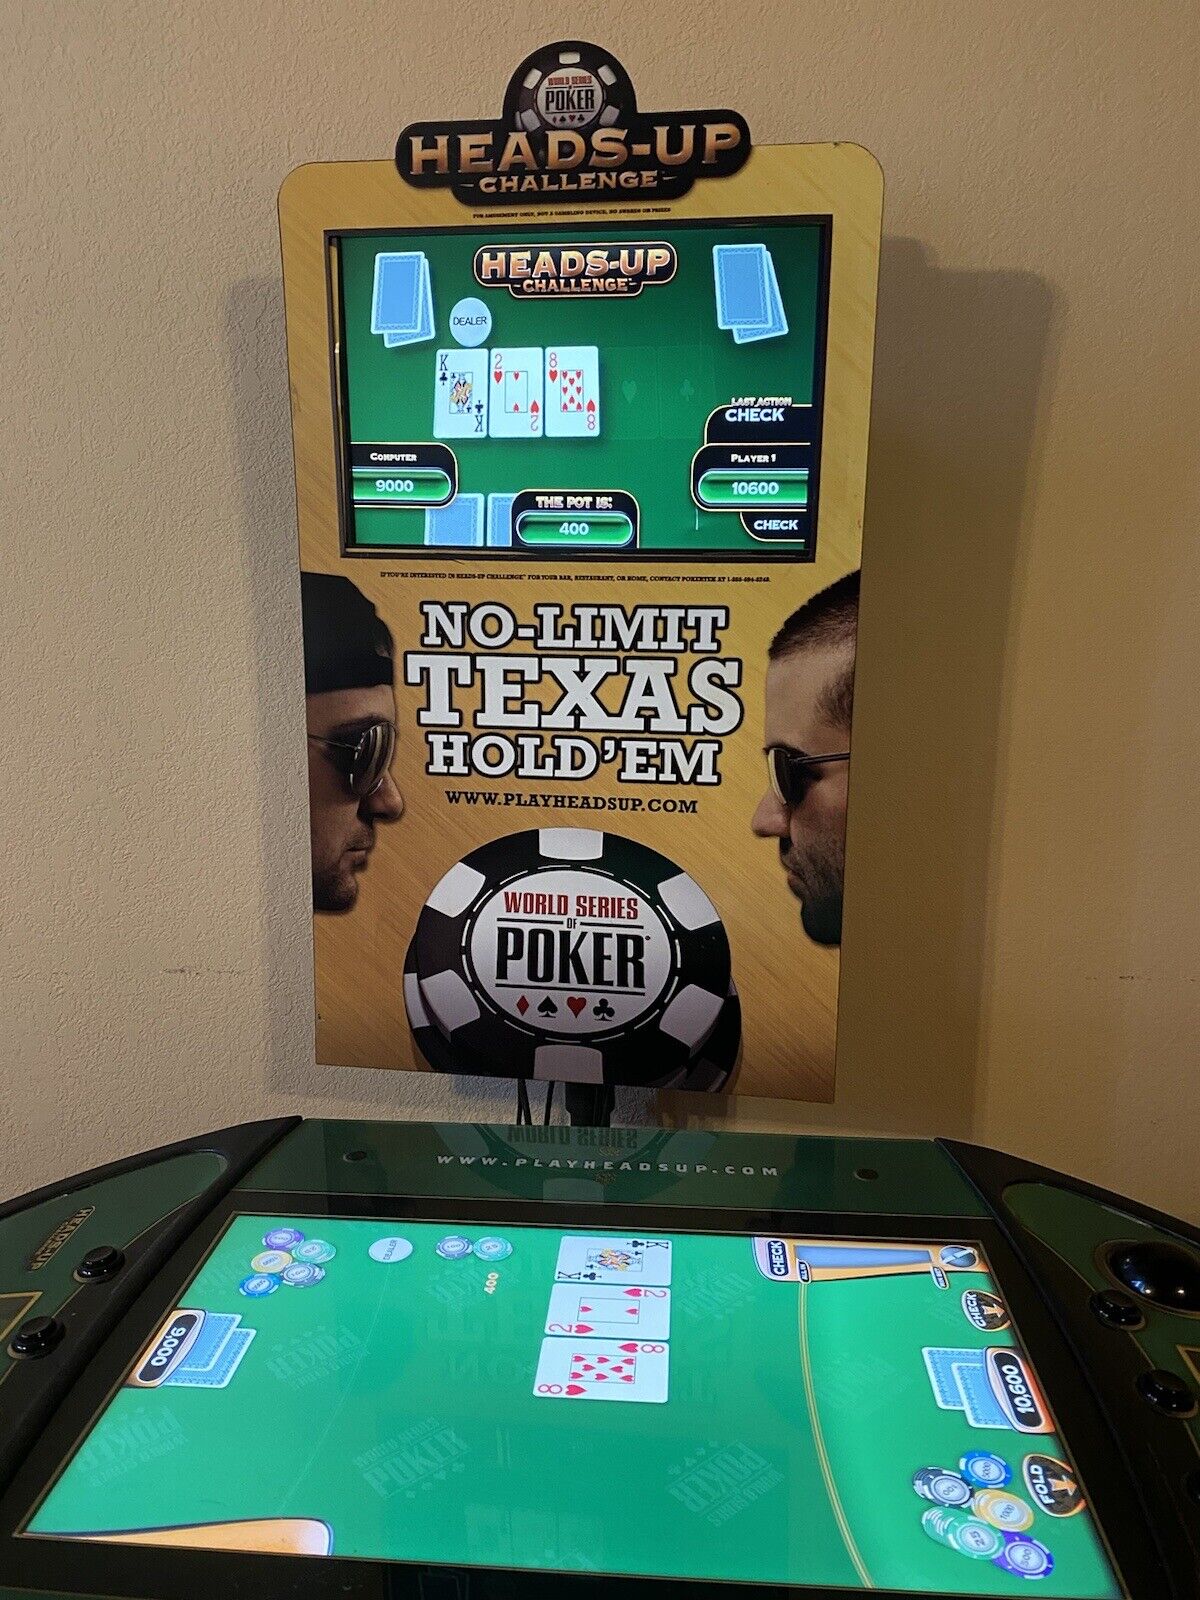 Heads up Texas Holdem Poker Machine/Arcade by Pokertek with 4 Screen Display